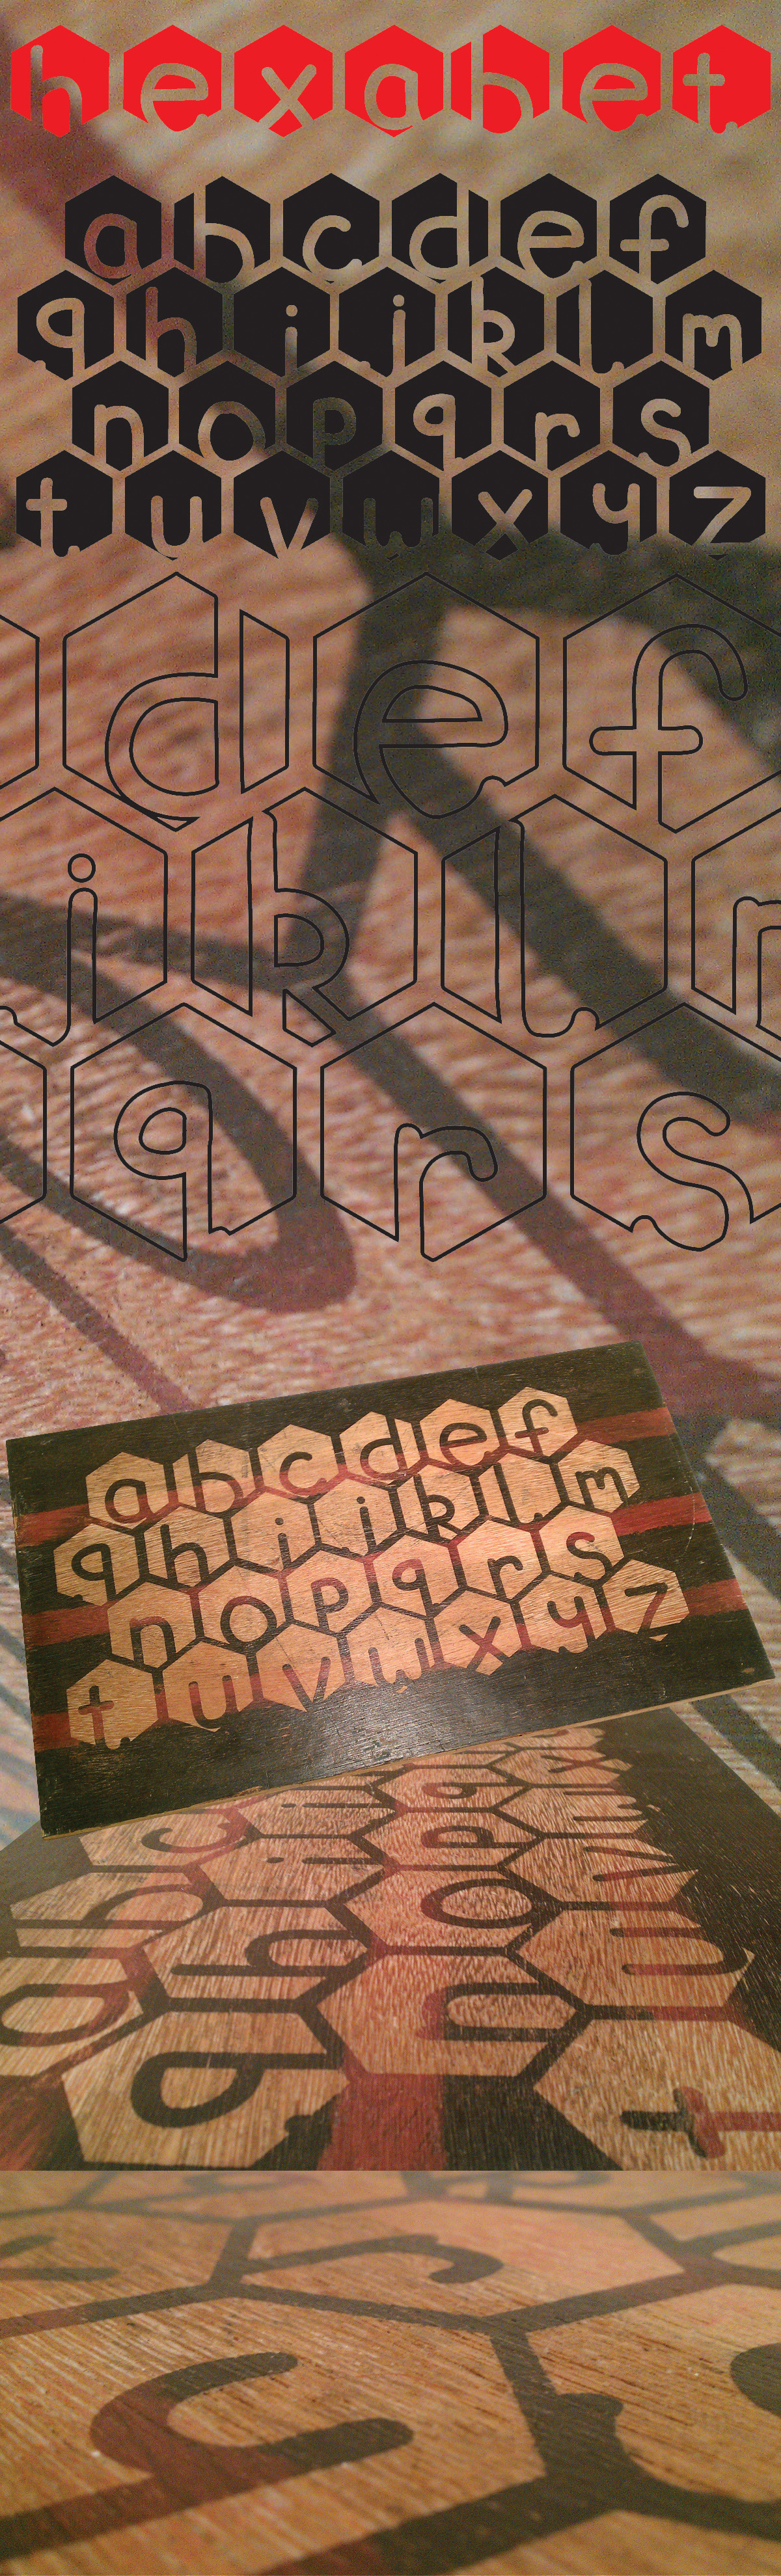 alphabet type experiment graphic design Project sand blast cut hand Render wood craft photo hexagon